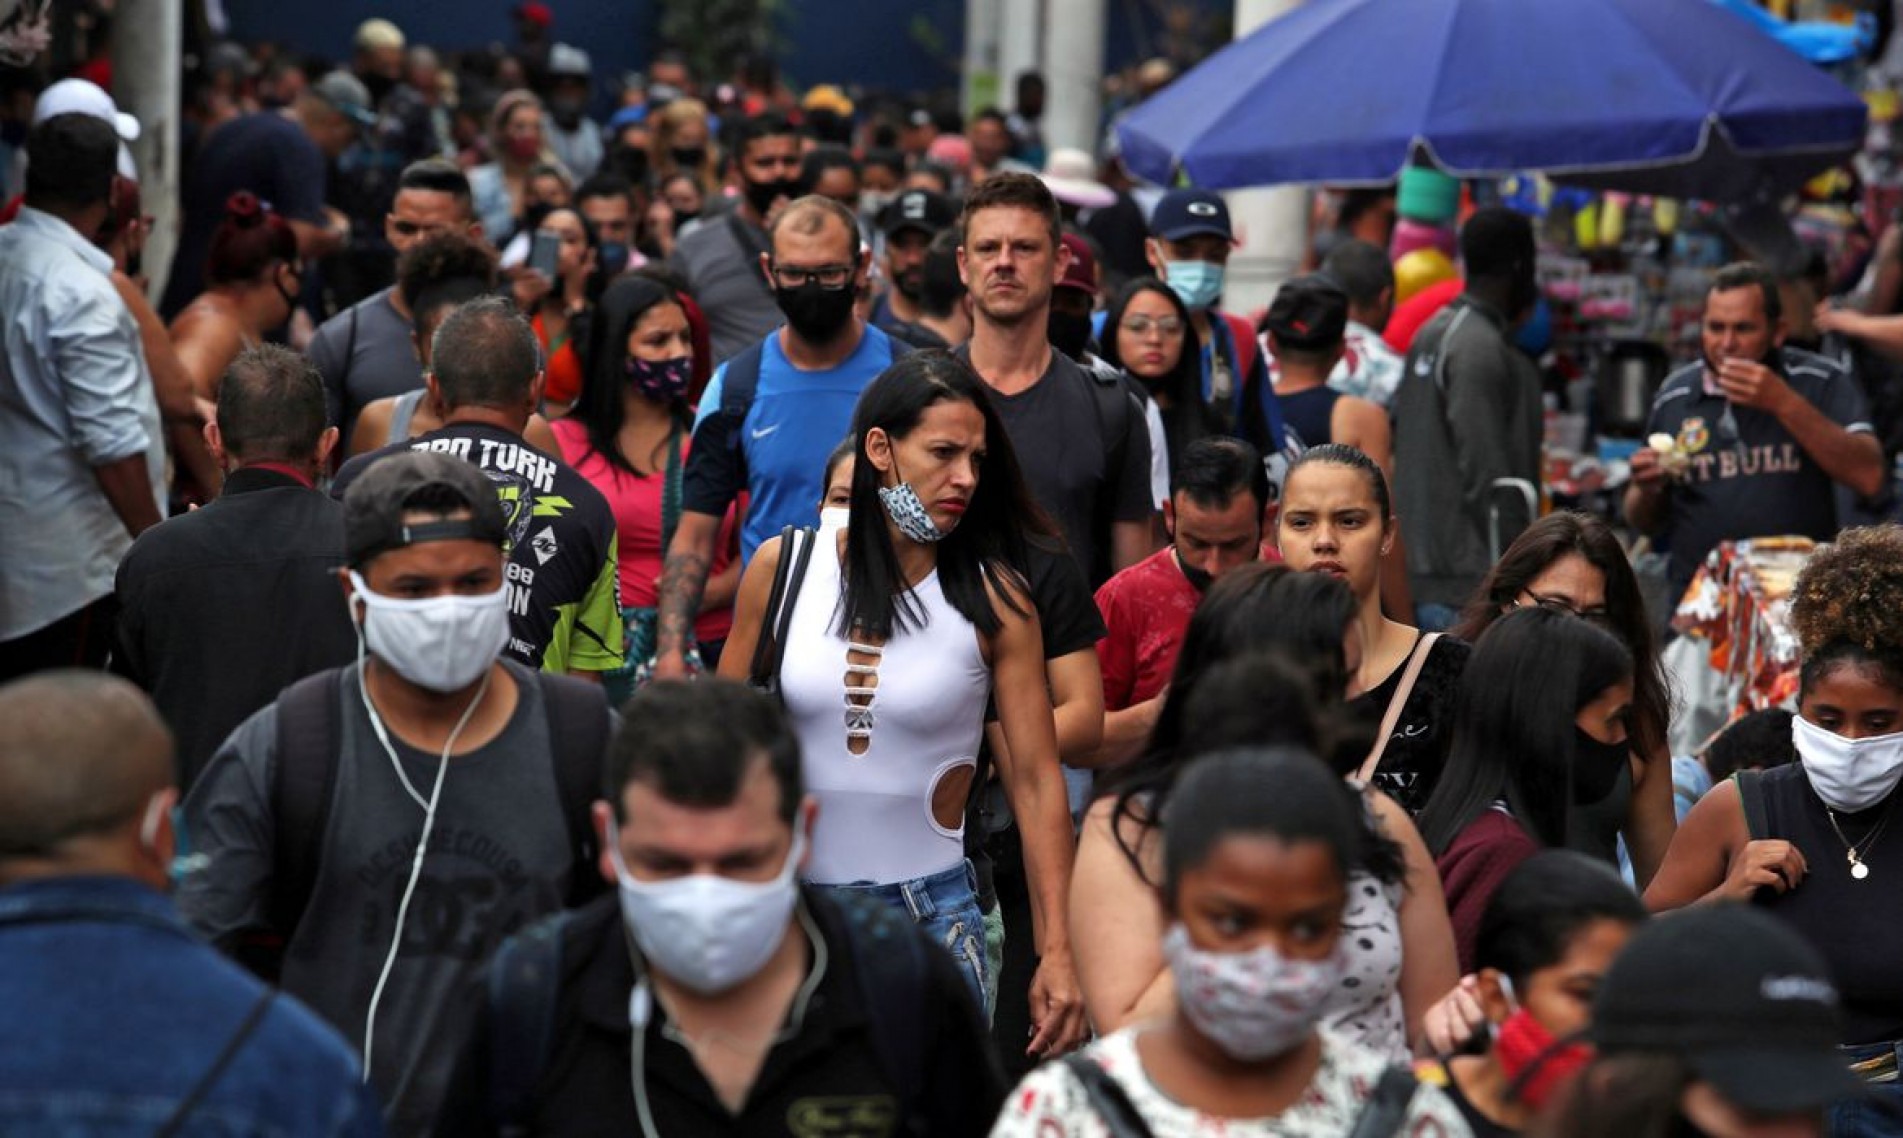 People walk at a popular shopping street amid the coronavirus disease (COVID-19) outbreak in Sao Paulo, Brazil December 17, 2020. REUTERS/Amanda Perobelli